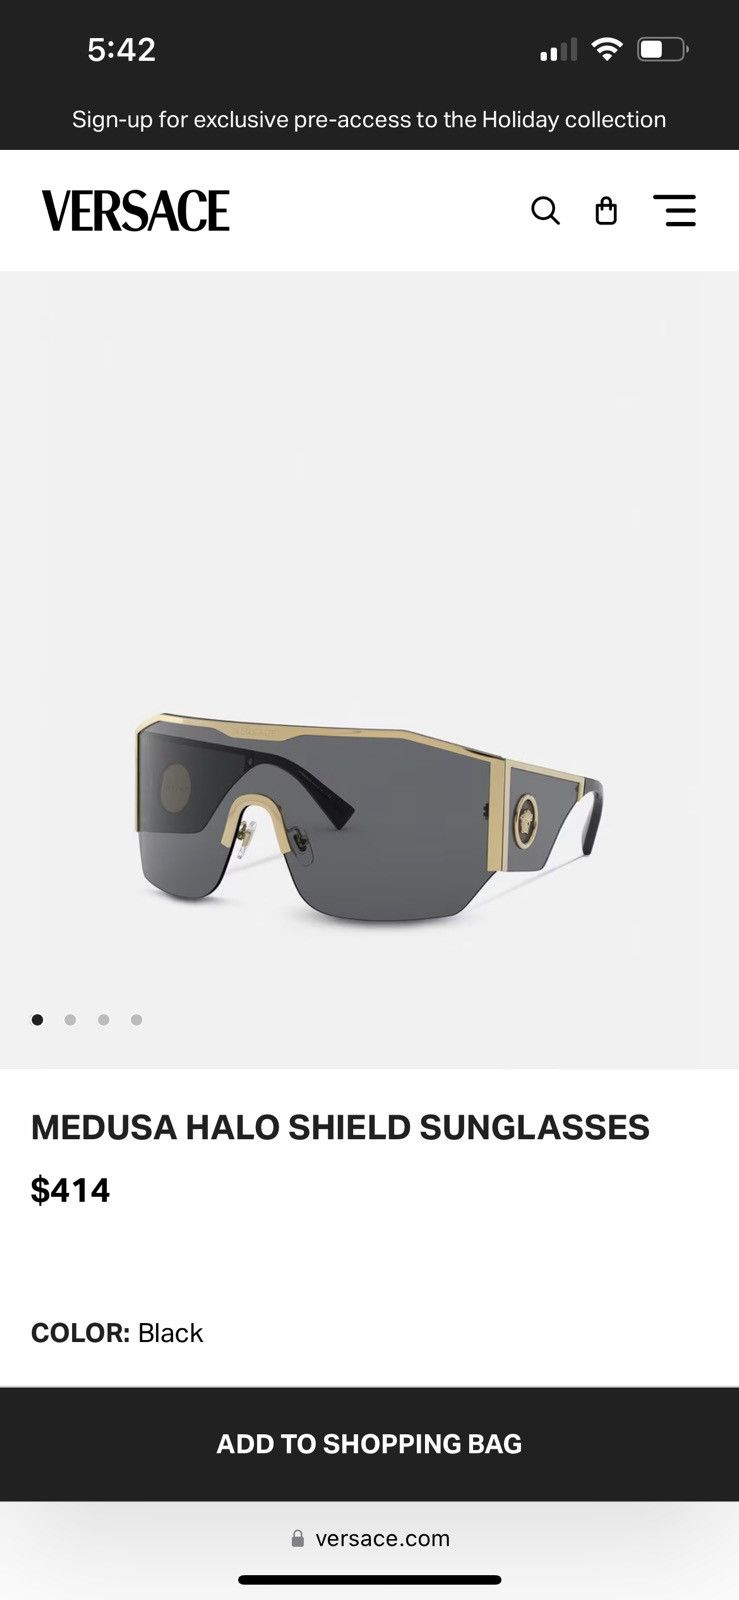 Versace Medusa Halo Shield Sunglasses Grailed 